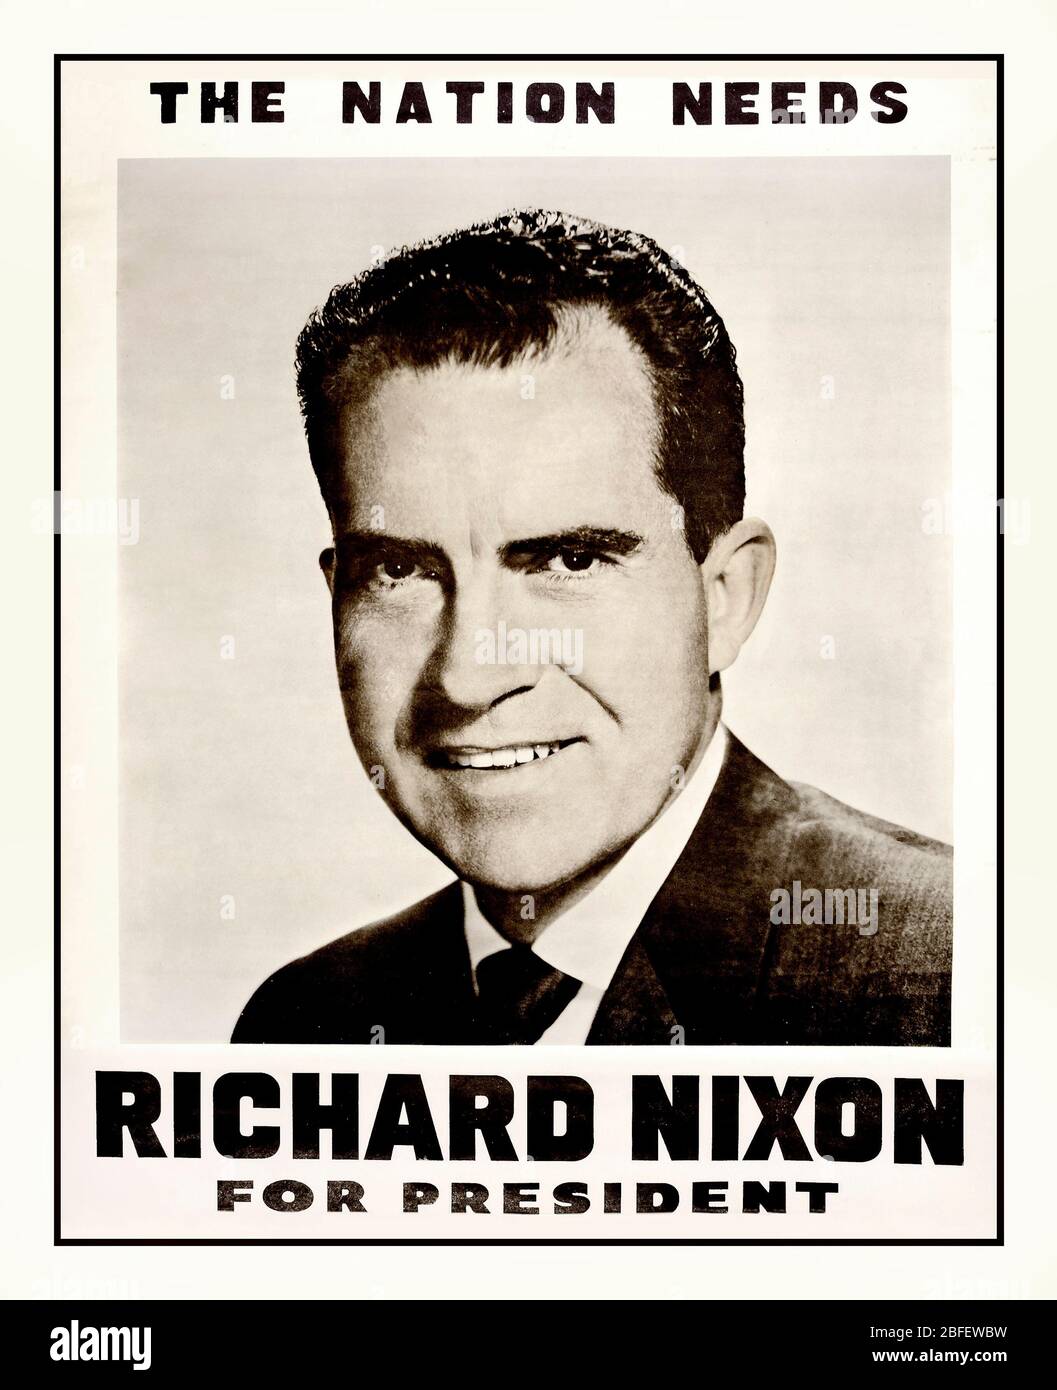 37th US President RICHARD NIXON Glossy 8x10 Photo Poster Oath of Office Print 